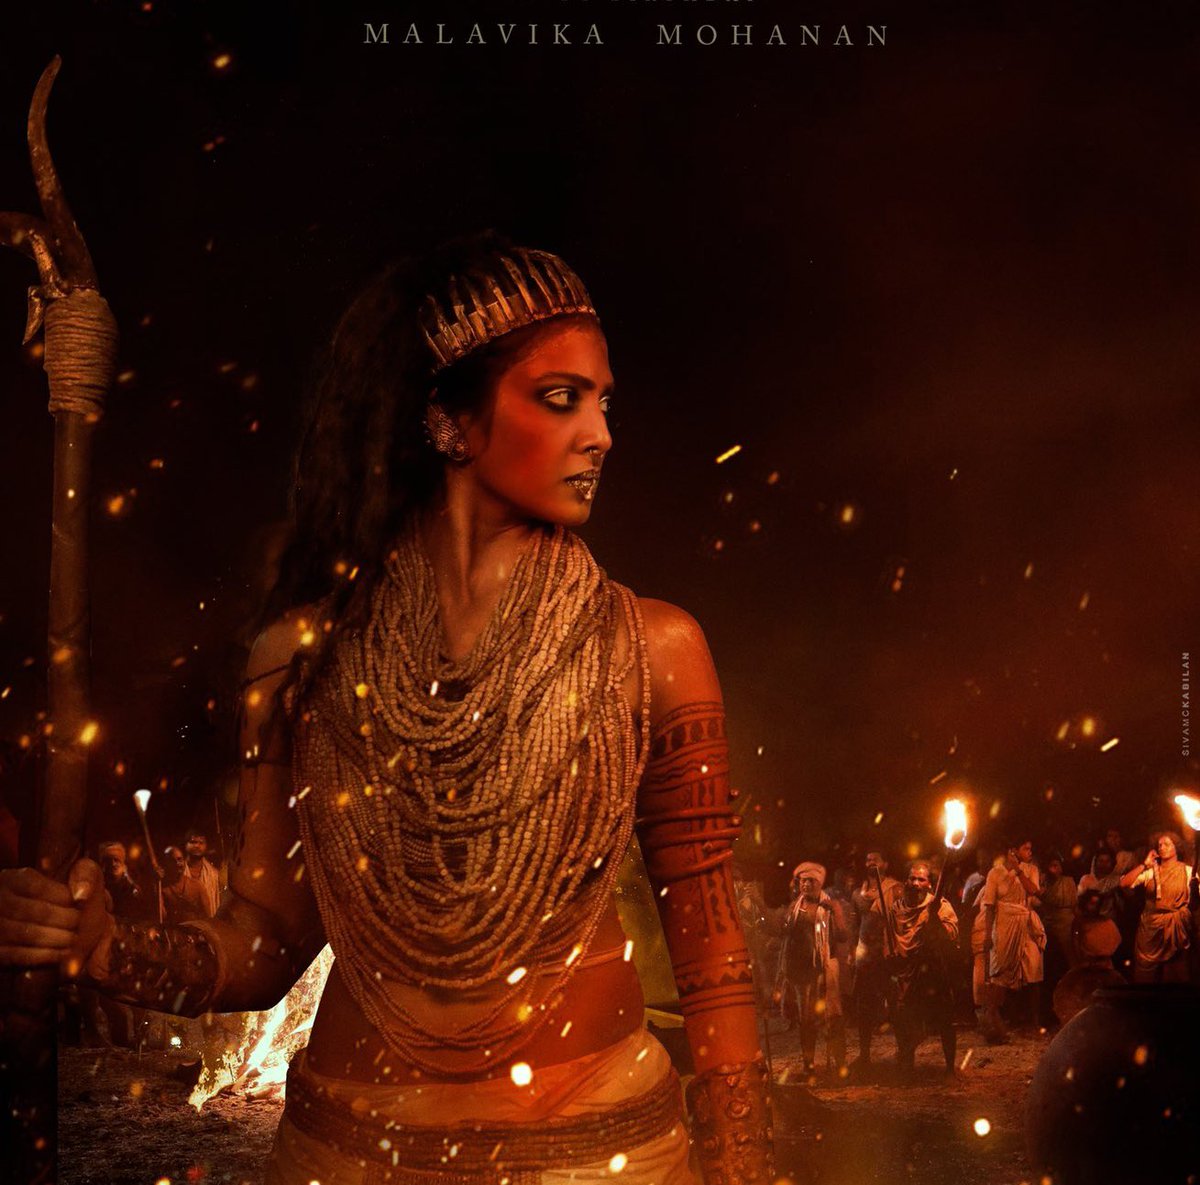 Aarathi eyes 🔥🔥 #MalavikaMohanan 🔥🔥

#malavika 
Waiting for #thangalaan film
❤️🔥🔥 
Queen Malavika ❤️🔥

@MalavikaM_